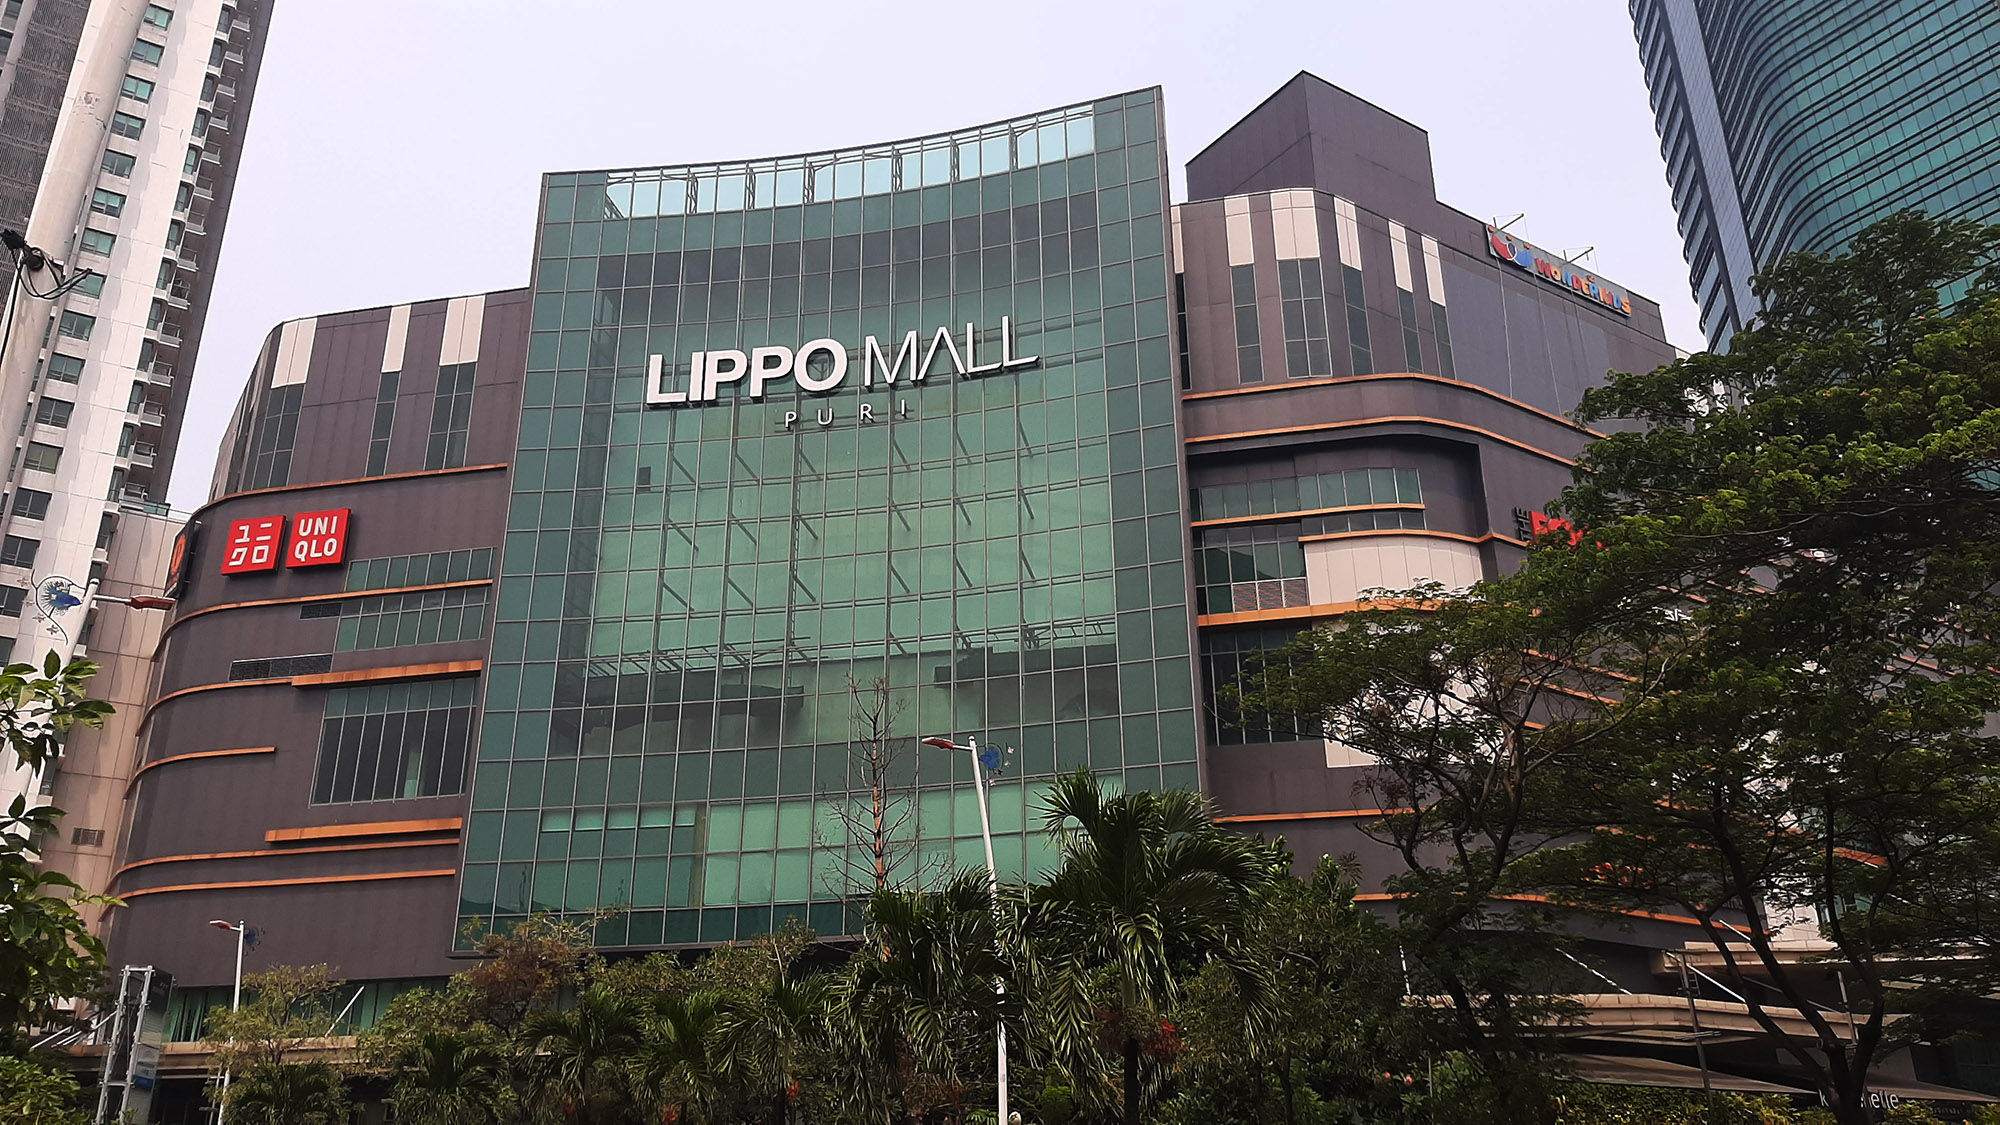 <p>Lanskap bangunan pusat perbelanjaan Lippo Mall Puri, di kawasan Jakarta Barat, Minggu, 6 September 2020. PT Lippo Karawaci Tbk (LPKR) menjual kepemilikan atas Lippo Mall Puri yang saat ini dikelola oleh anak usahanya PT Mandiri Cipta Gemilang (MCG) kepada penjual yang juga merupakan pihak yang terafiliasi dengannya yakni PT Puri Bintang Terang (PBT). Nilai transaksi pengalihan diperkirakan sebesar total Rp 3,50 triliun, belum termasuk PPN, Rencana transaksi dilaksanakan merupakan bagian dari strategi asset-light yang dijalankan perseroan dan dilakukan untuk meningkatkan likuiditas perseroan dan hasil yang akan diterima oleh perseroan dari pelaksanaan rencana transaksi akan digunakan antara lain untuk membiayai kegiatan operasional perseroan. Foto: Ismail Pohan/TrenAsia</p>
